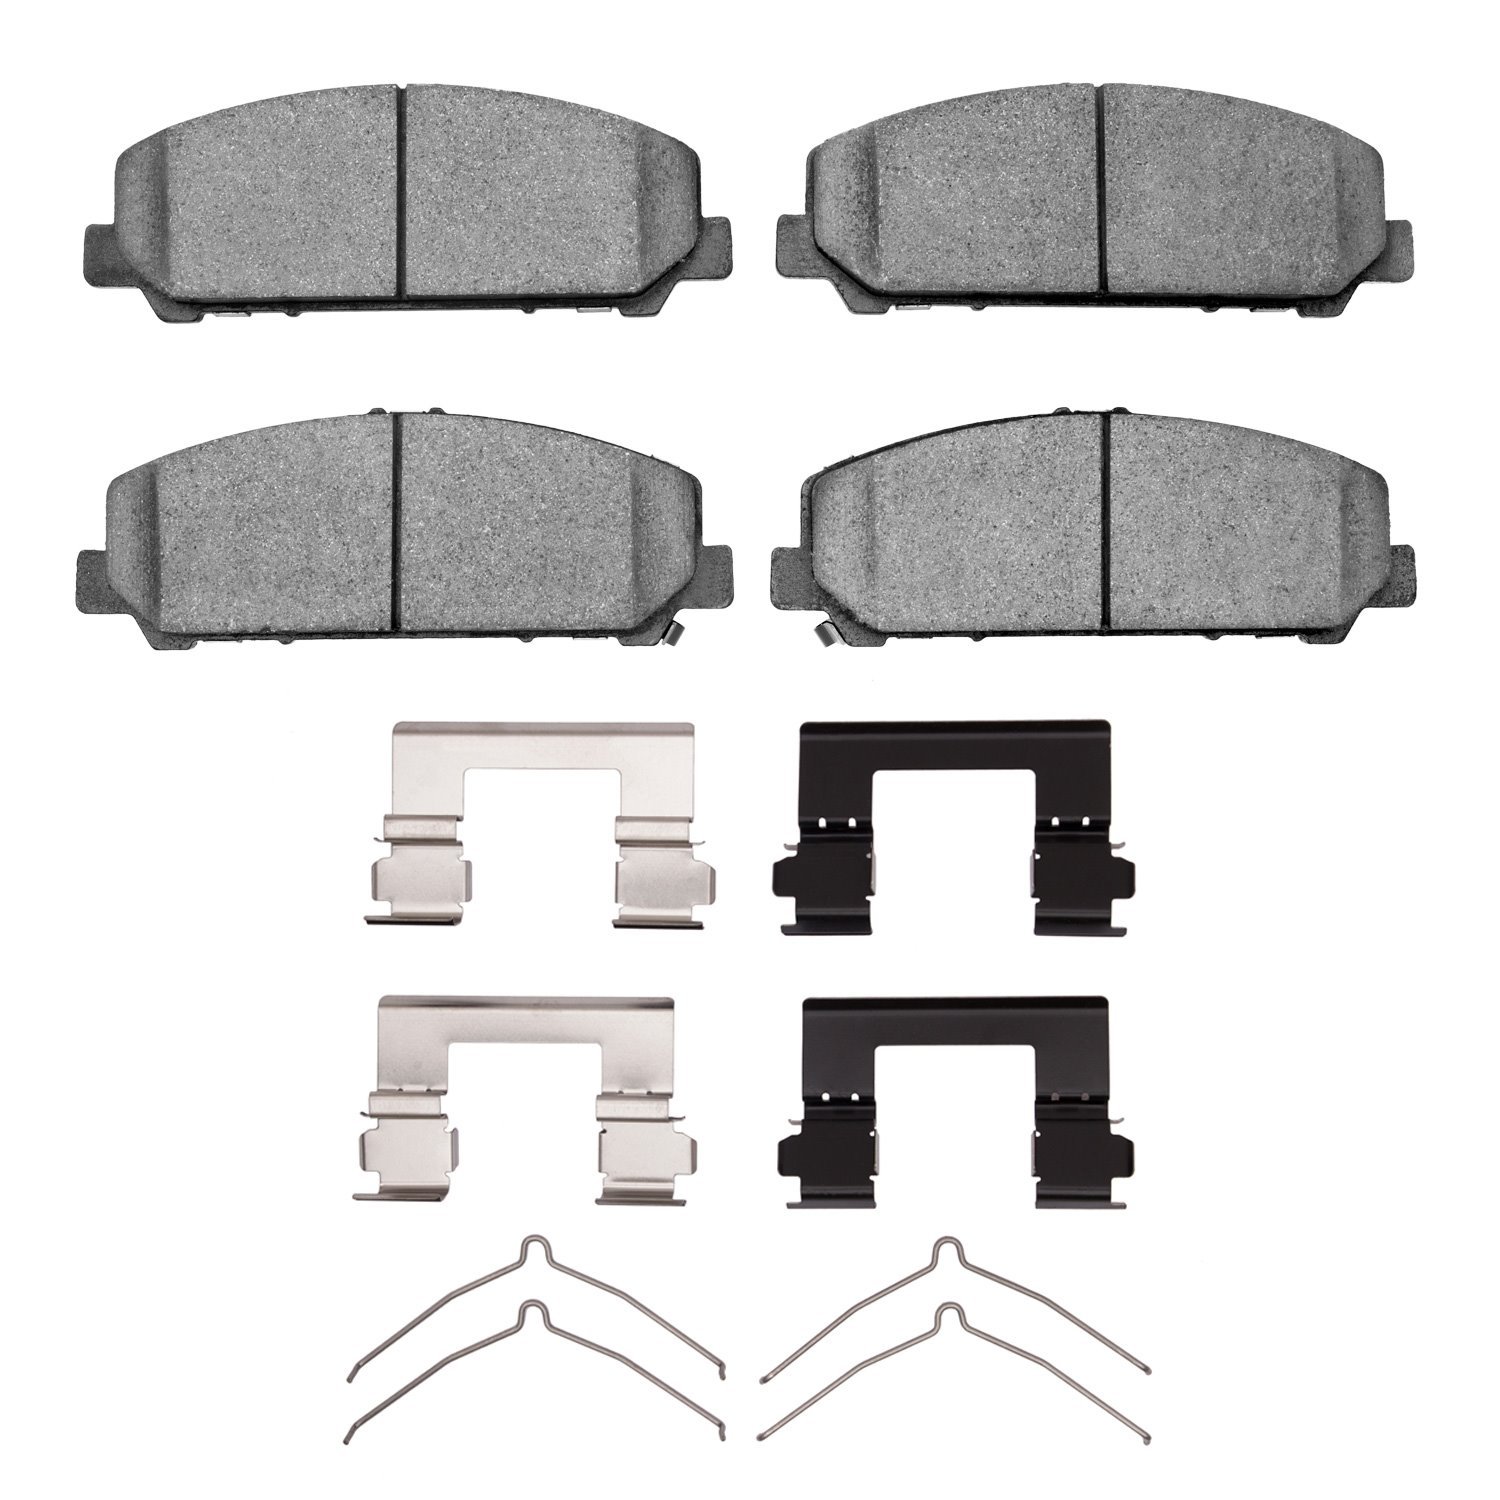 1310-1509-01 3000-Series Ceramic Brake Pads & Hardware Kit, Fits Select Infiniti/Nissan, Position: Front